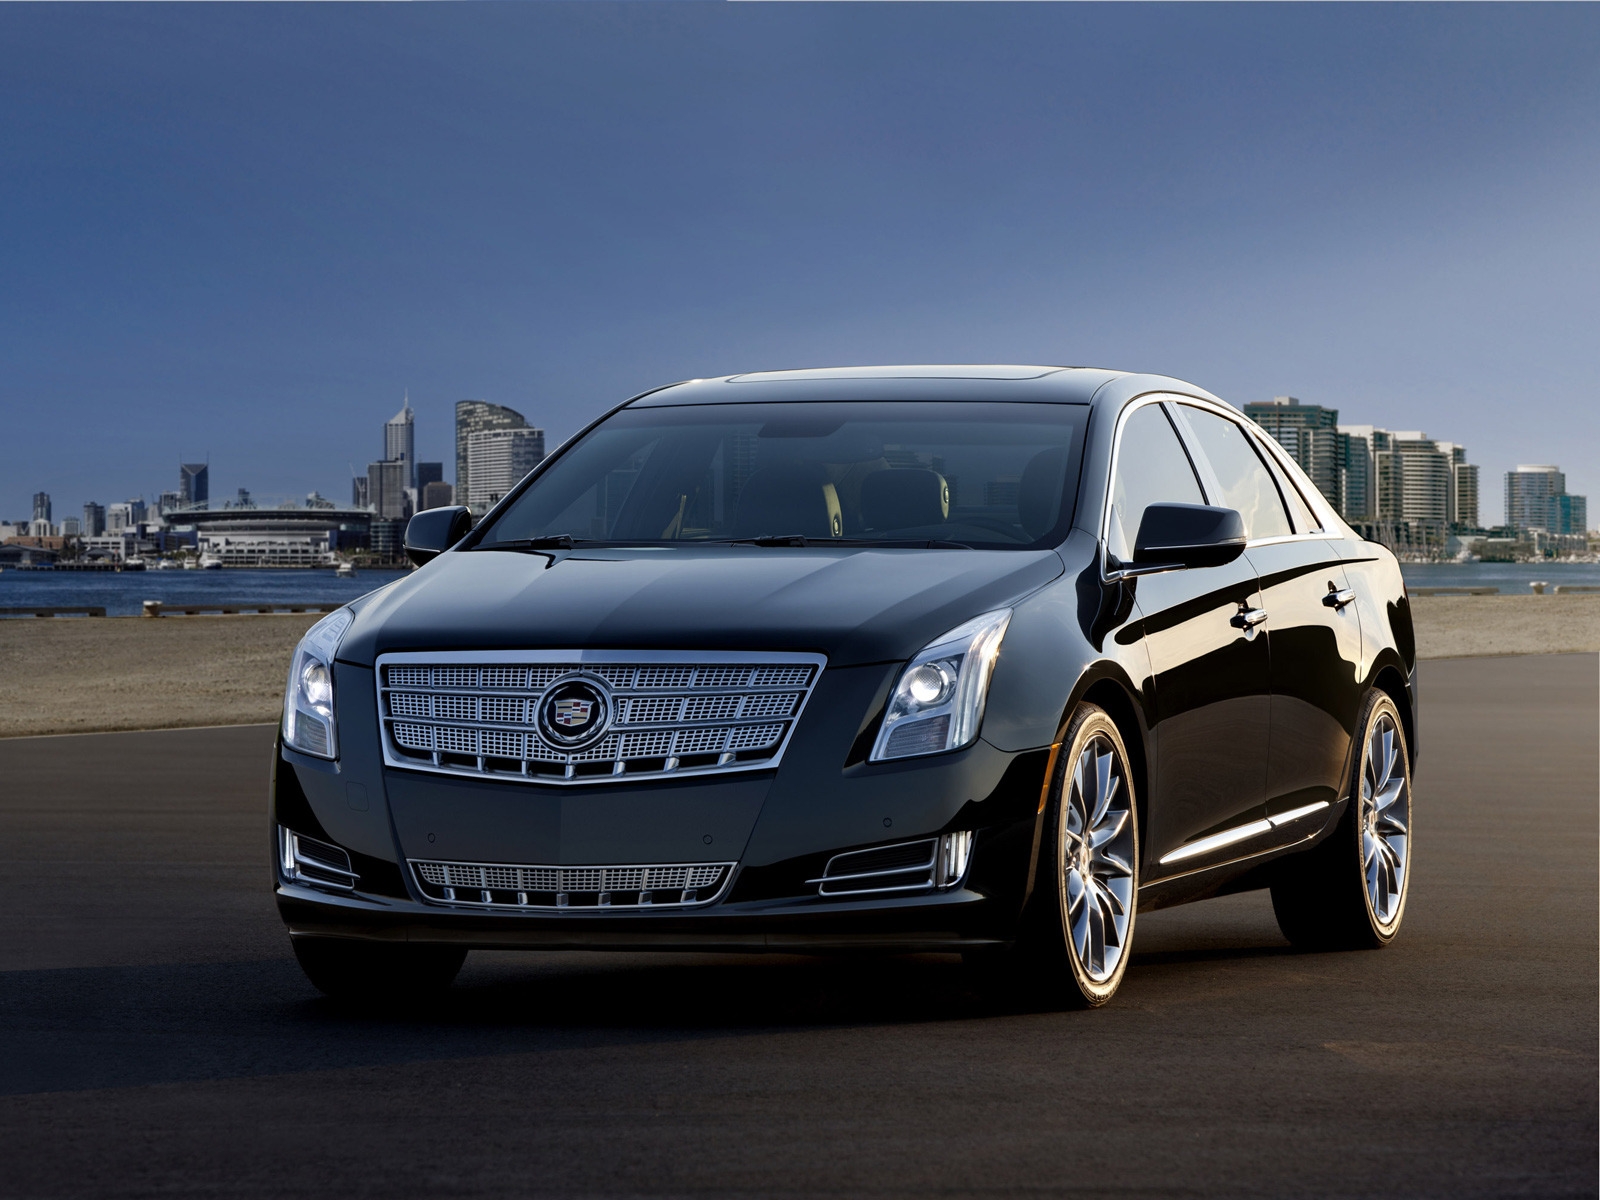 2013 Cadillac XTS for 1600 x 1200 resolution